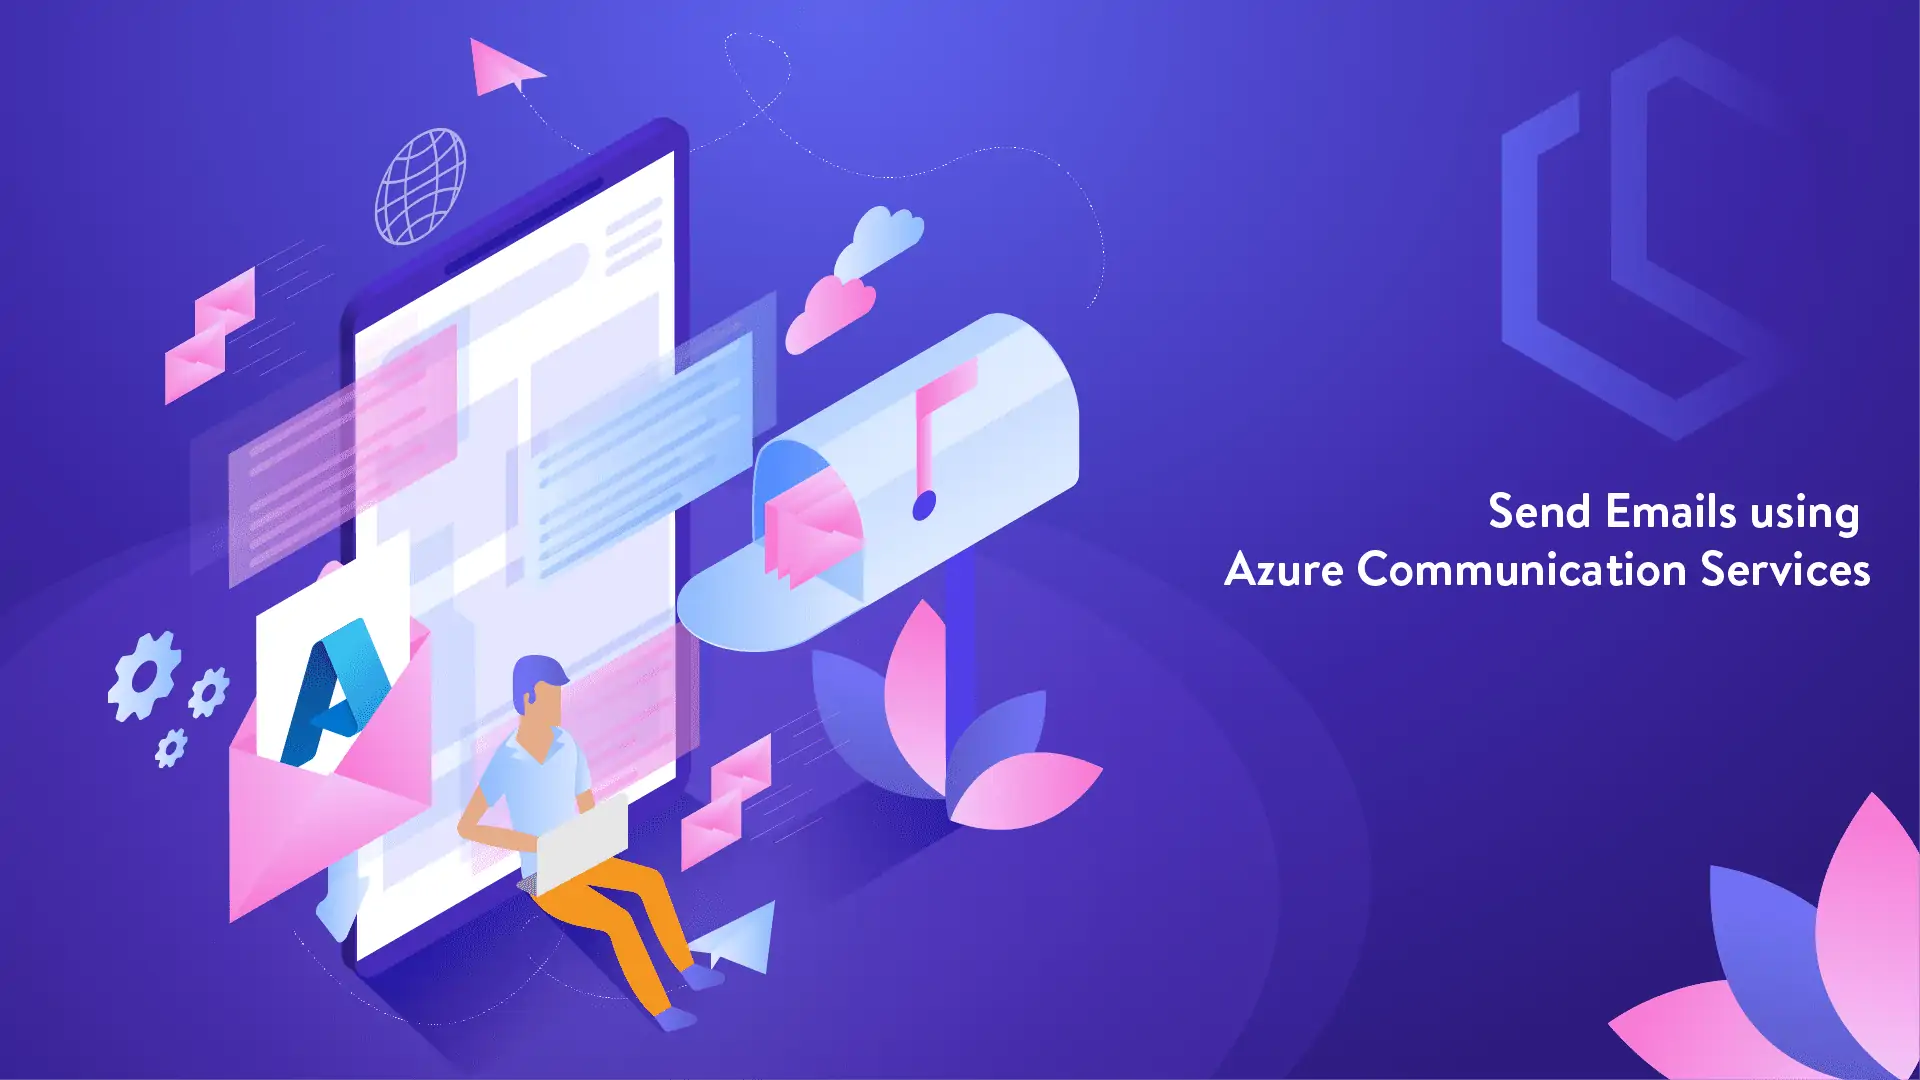 .NET - Send emails using Azure Communication Services